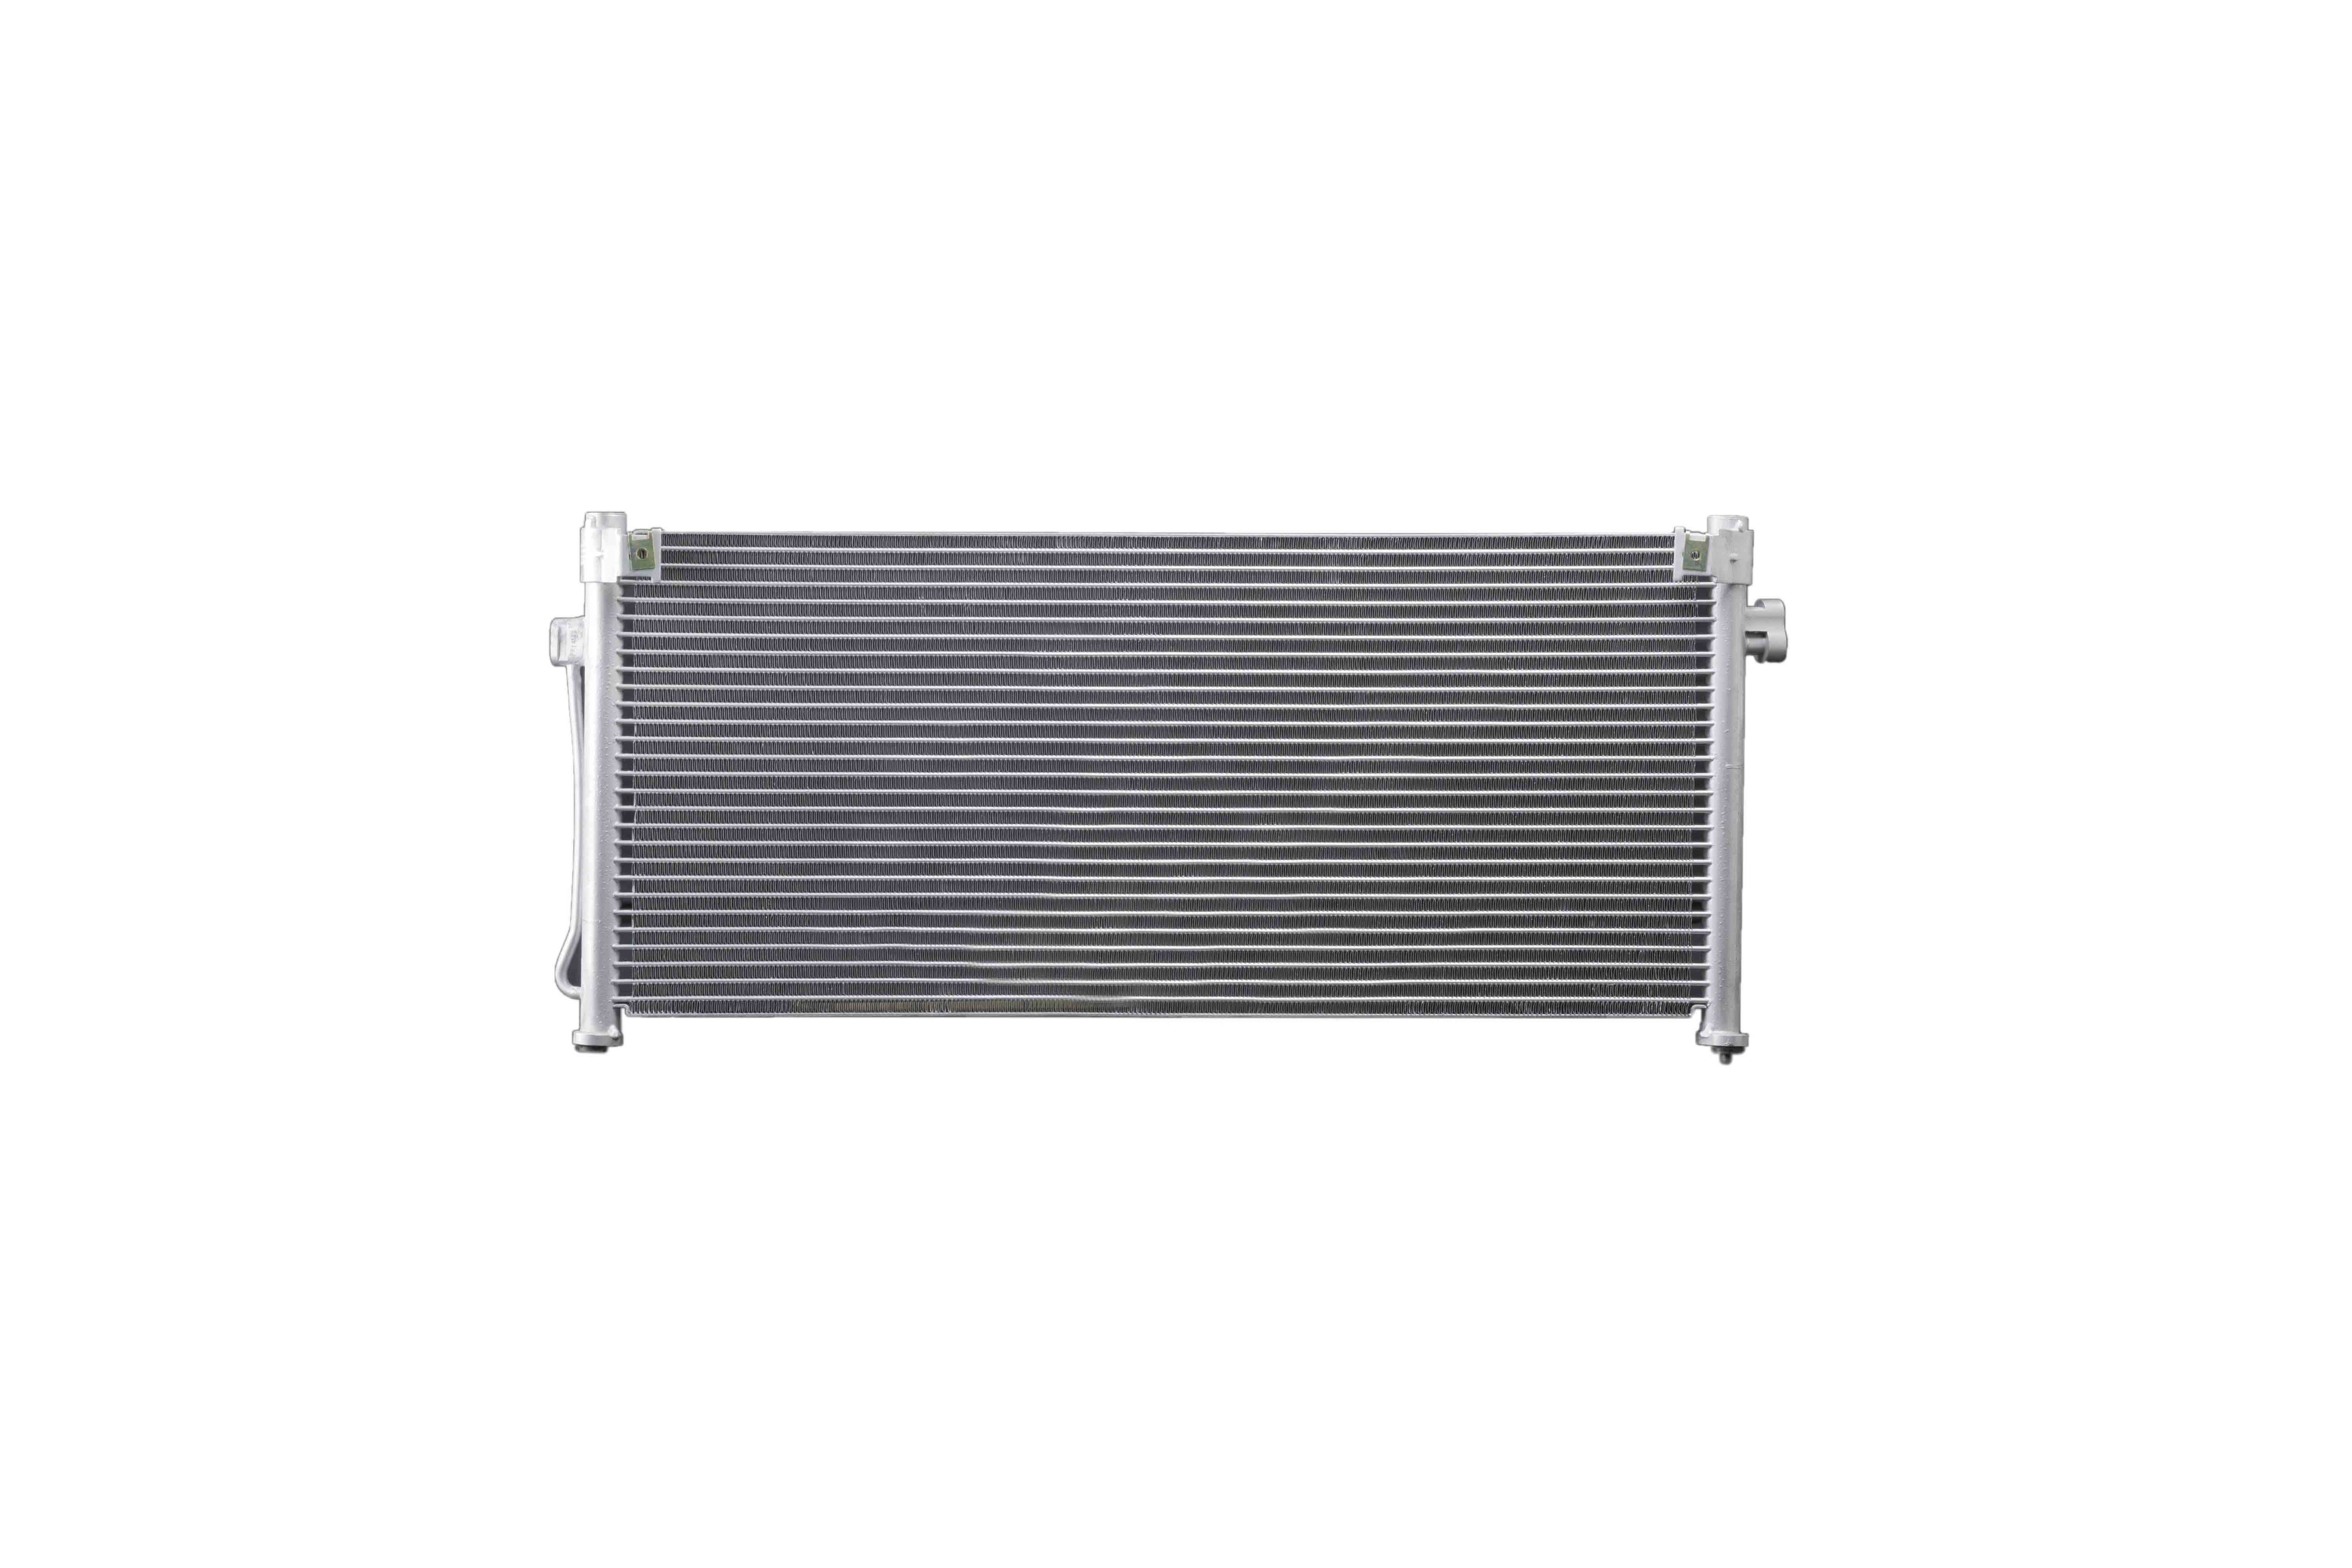 ECCPP Auto Parts Air Conditioning A/C AC Condenser Aluminum A/C AC Condenser Replacement Radiator for CU3981 2012 2013 2014 Ford Focus 2.0L 3981 FO3030236